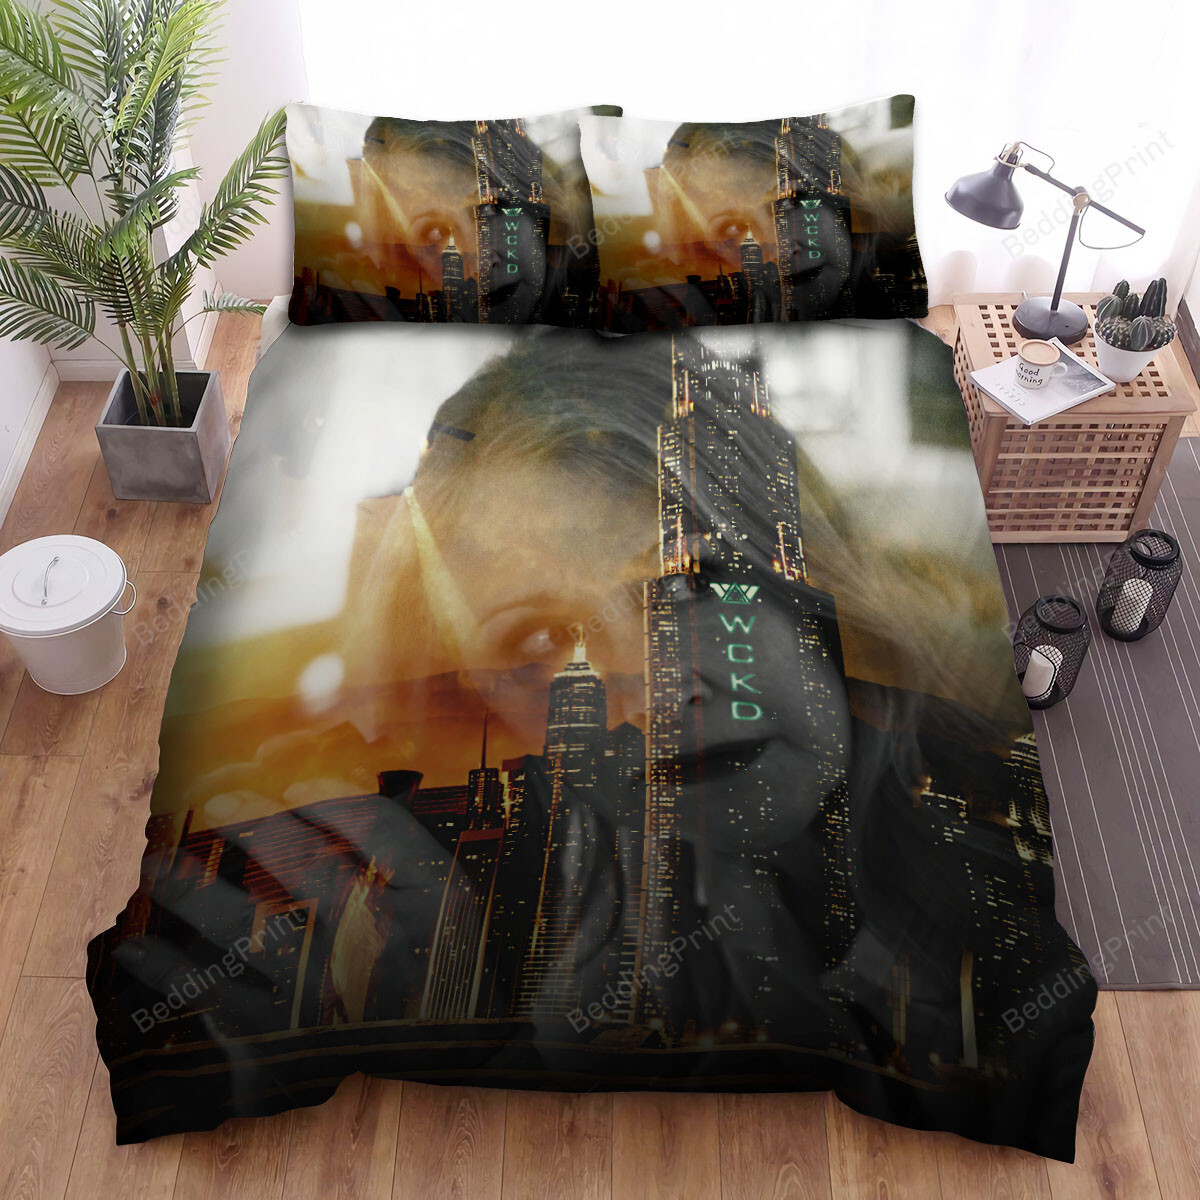 Maze Runner The Death Cure (2018) Movie Poster Artwork Bed Sheets Spread Comforter Duvet Cover Bedding Sets